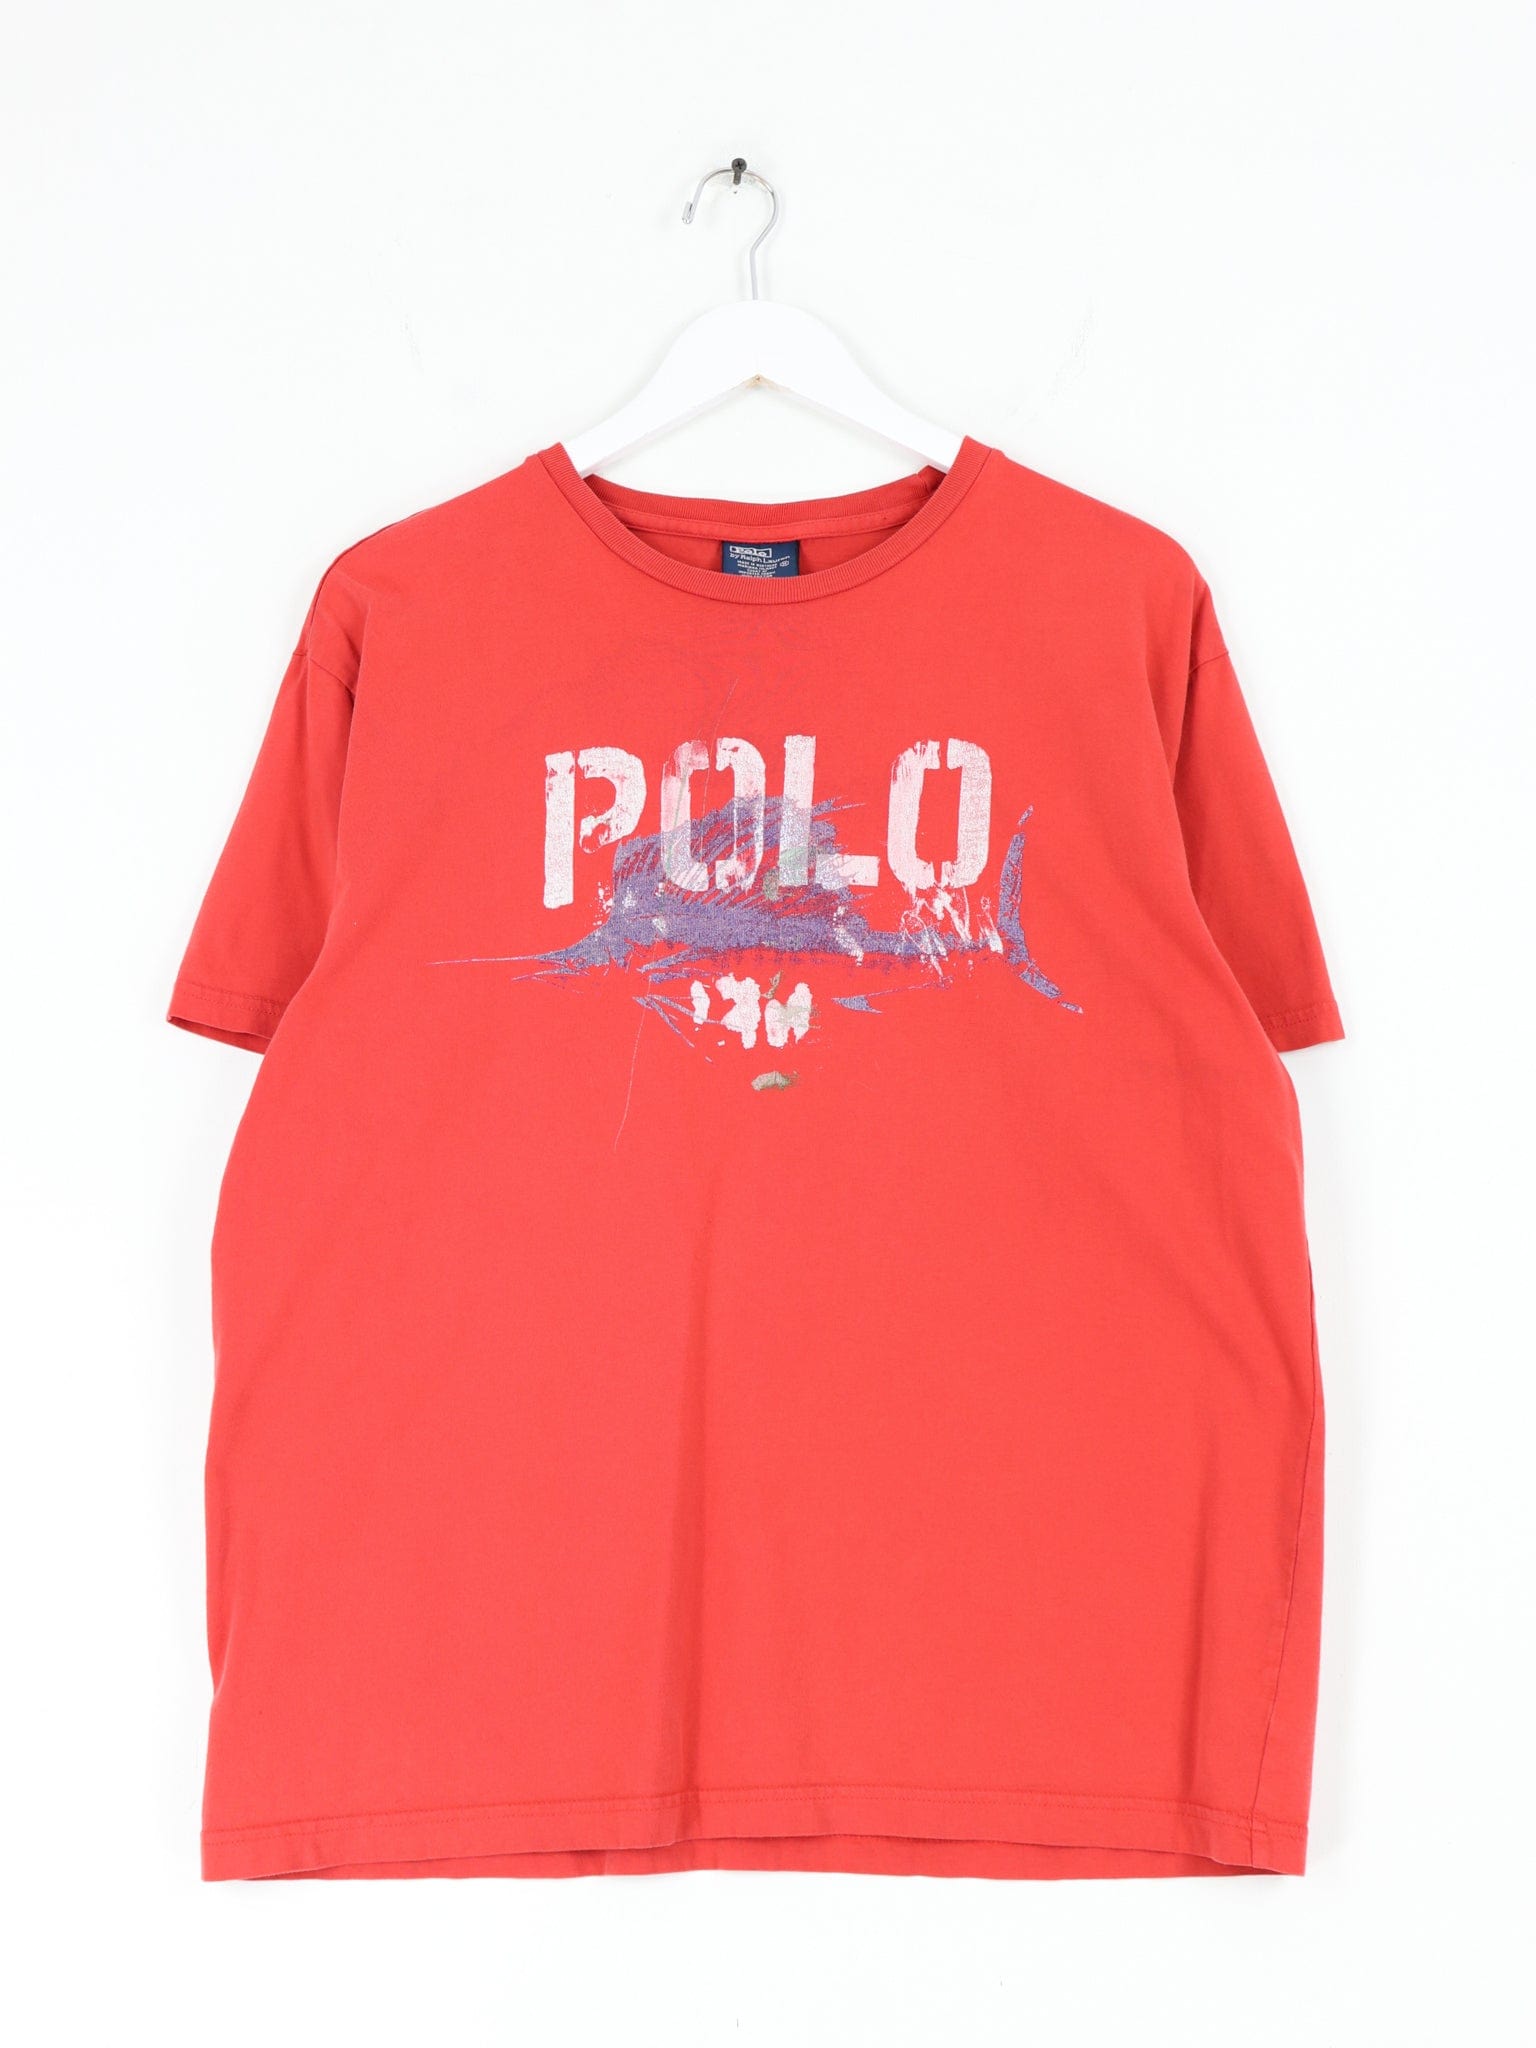 Polo T-Shirts & Tank Tops Vintage Polo Ralph Lauren Fishing T Shirt Size Medium